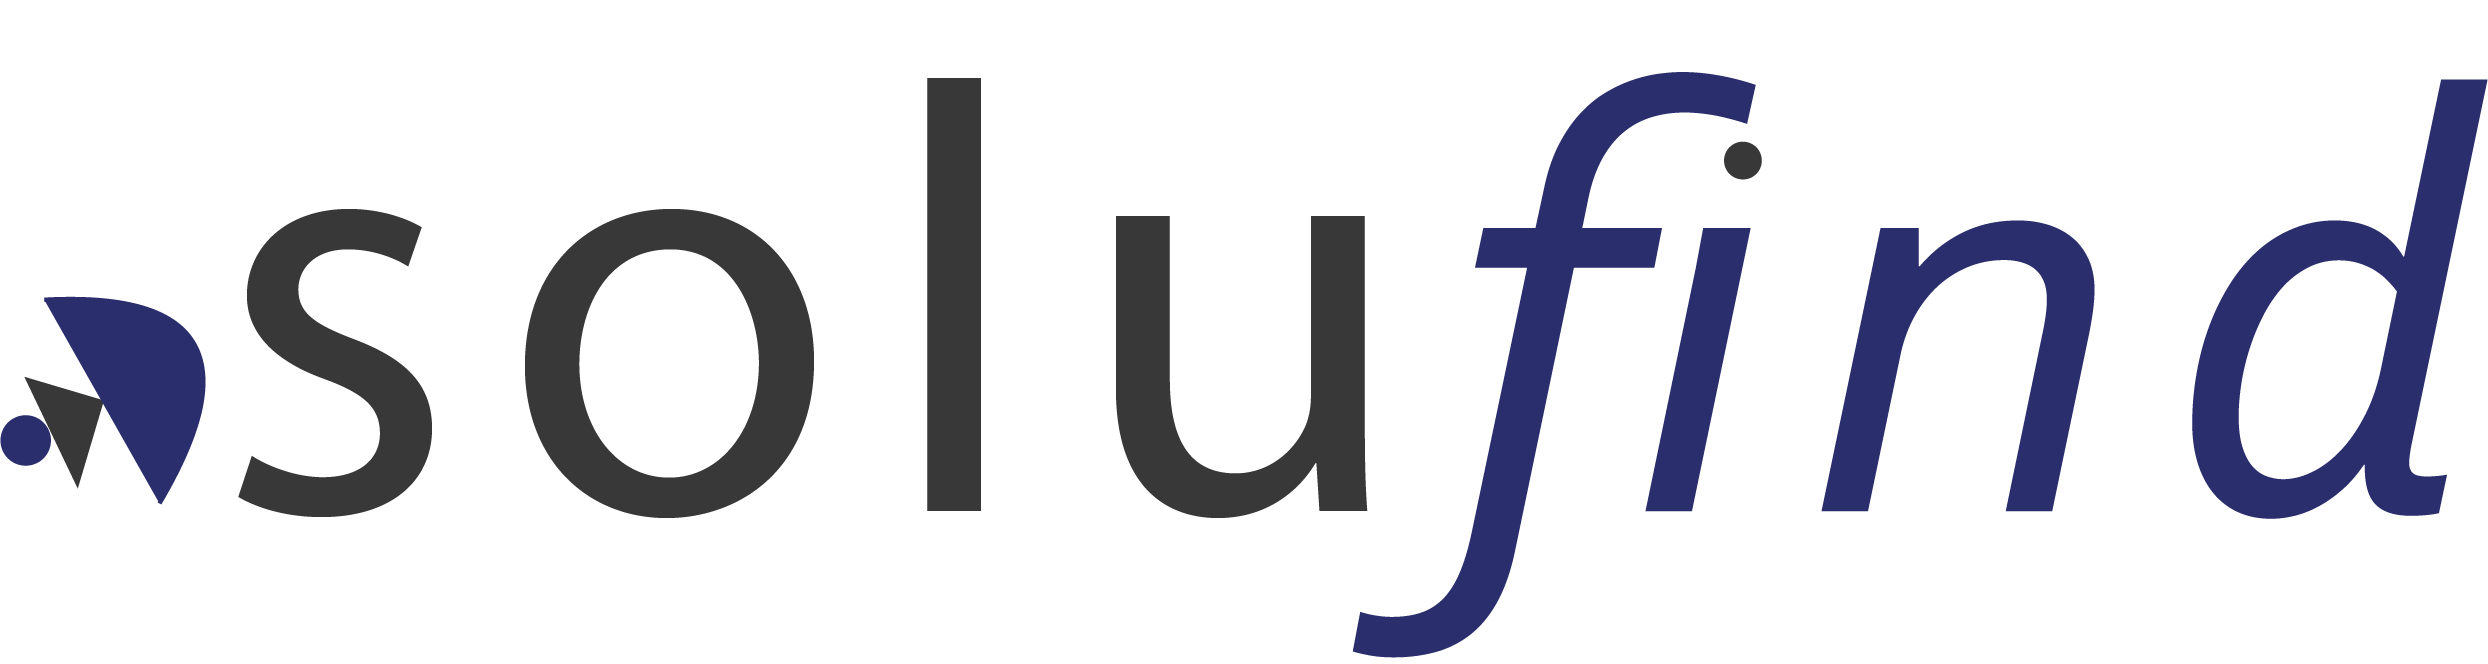 support logo